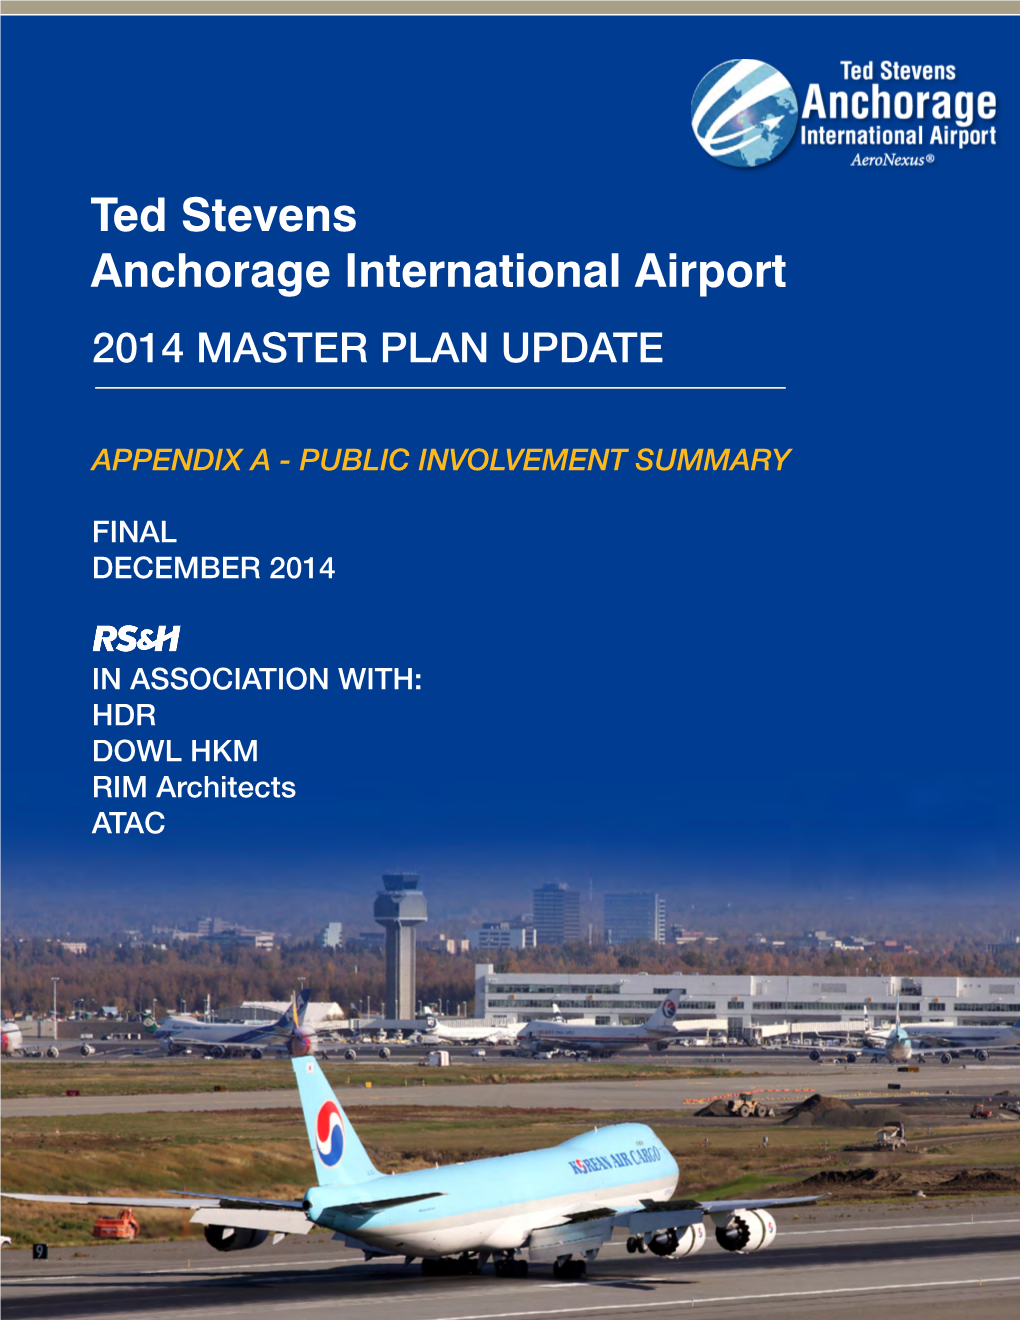 Ted Stevens Anchorage International Airport Master Plan Update